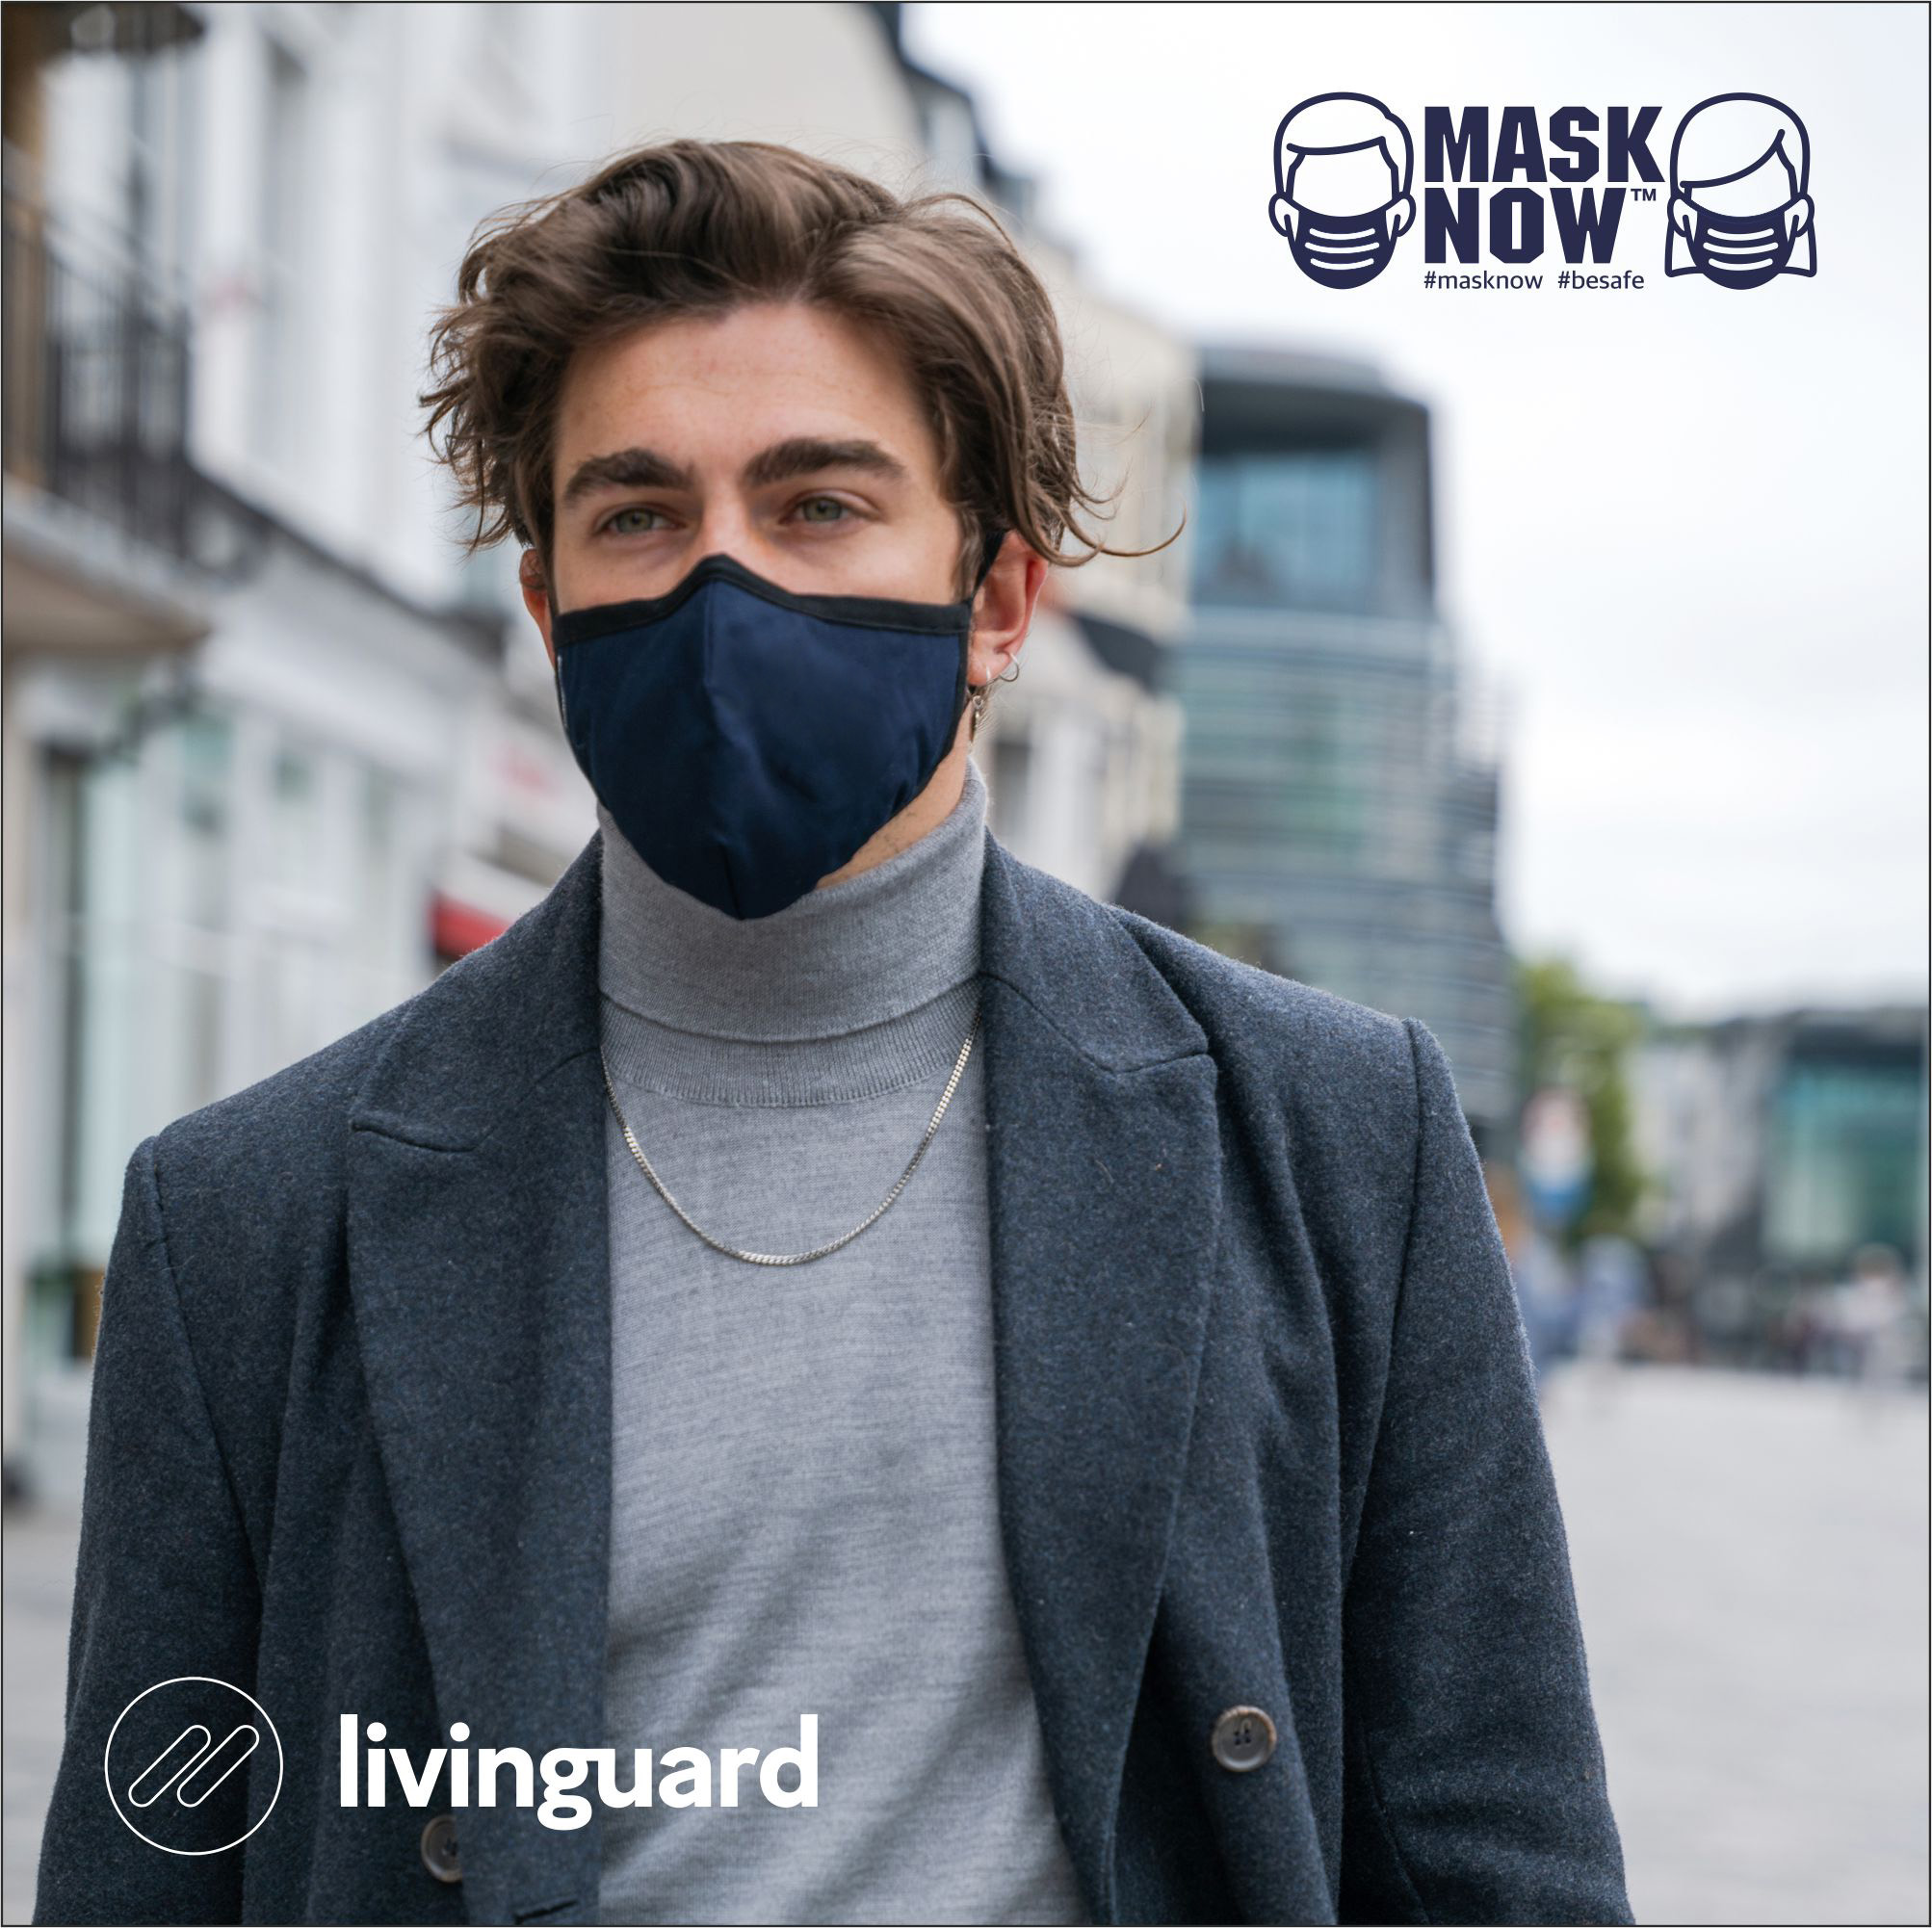 MaskNow.Co.uk brings revolutionary Livinguard face masks to UK